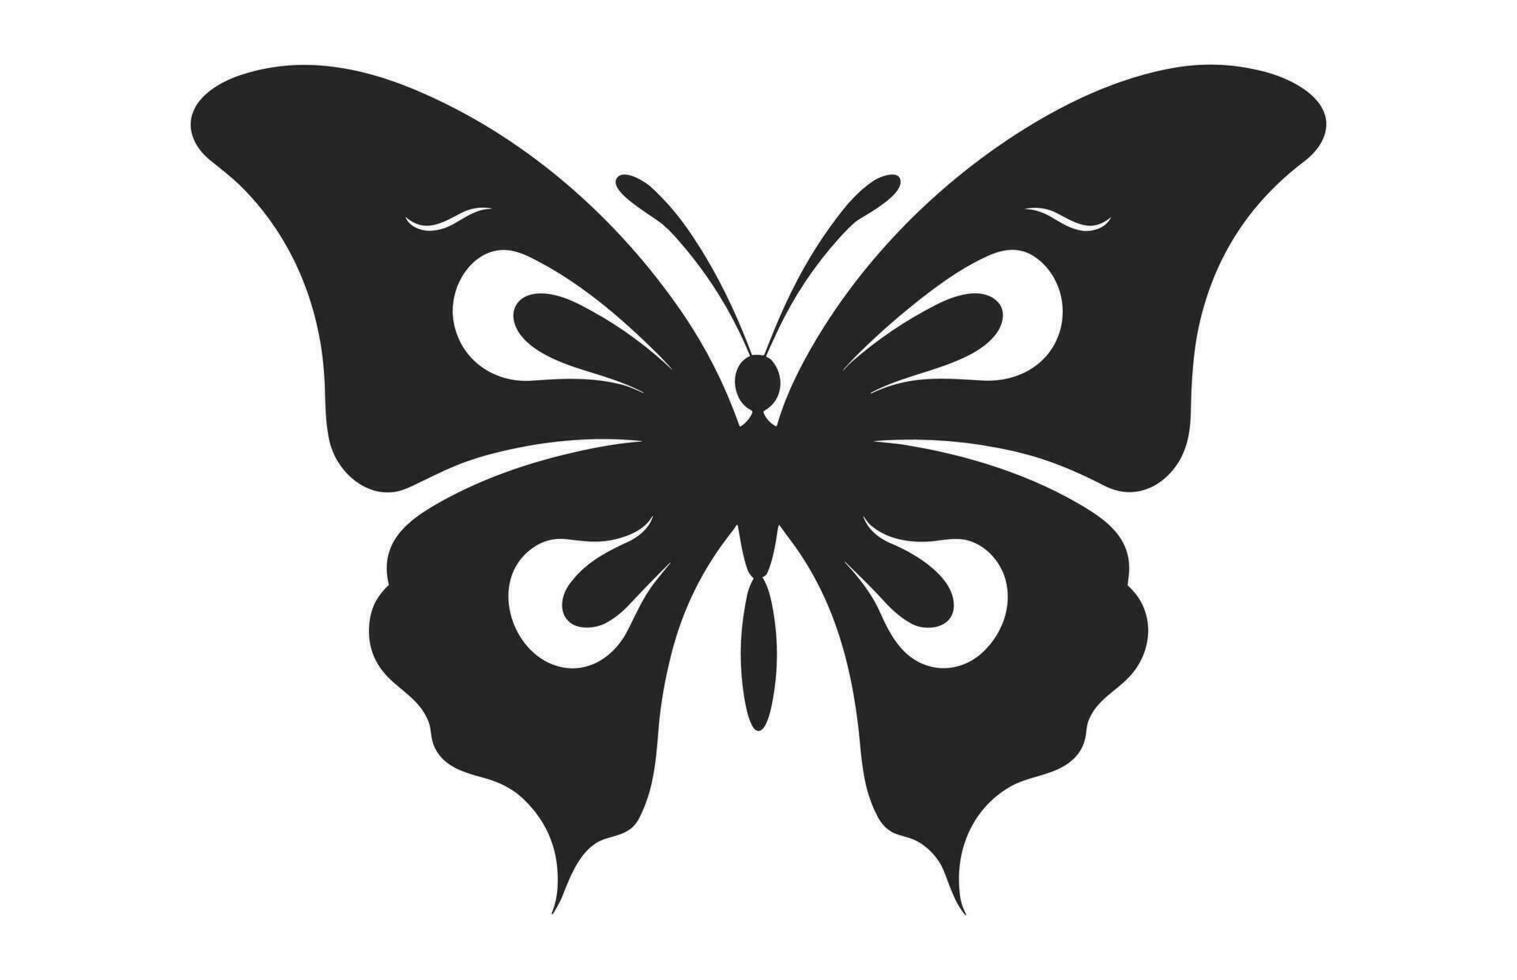 un hermosa mariposa silueta aislado en un blanco fondo, un monarca mariposa vector